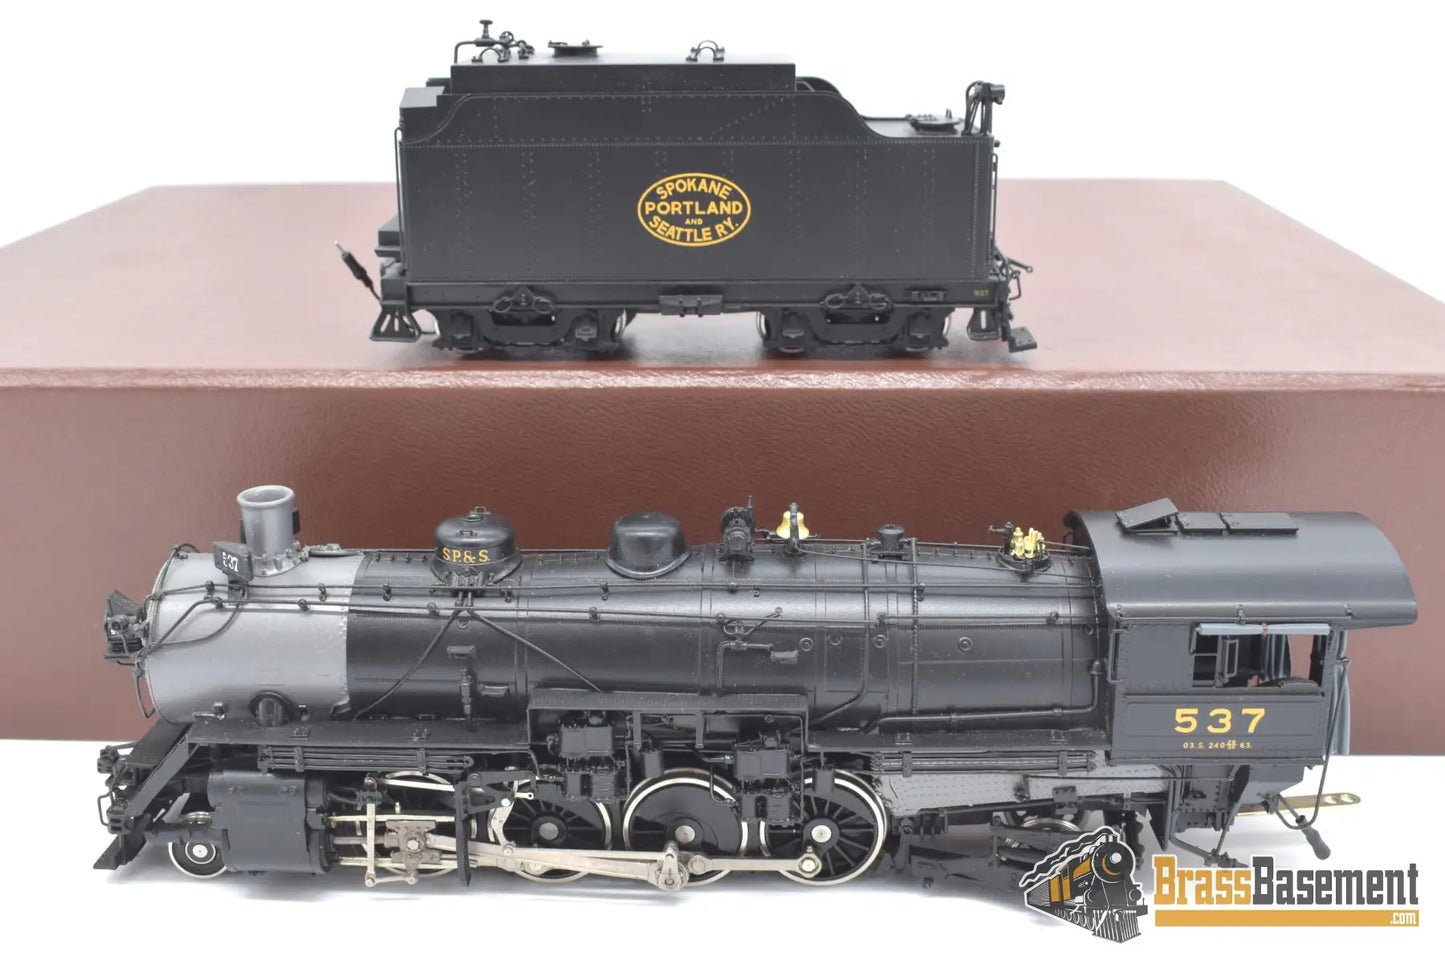 Ho Brass - W&R Sp&S Spokane Portland And Seattle O - 3 2 - 8 - 2 #537 F/P Nice Steam